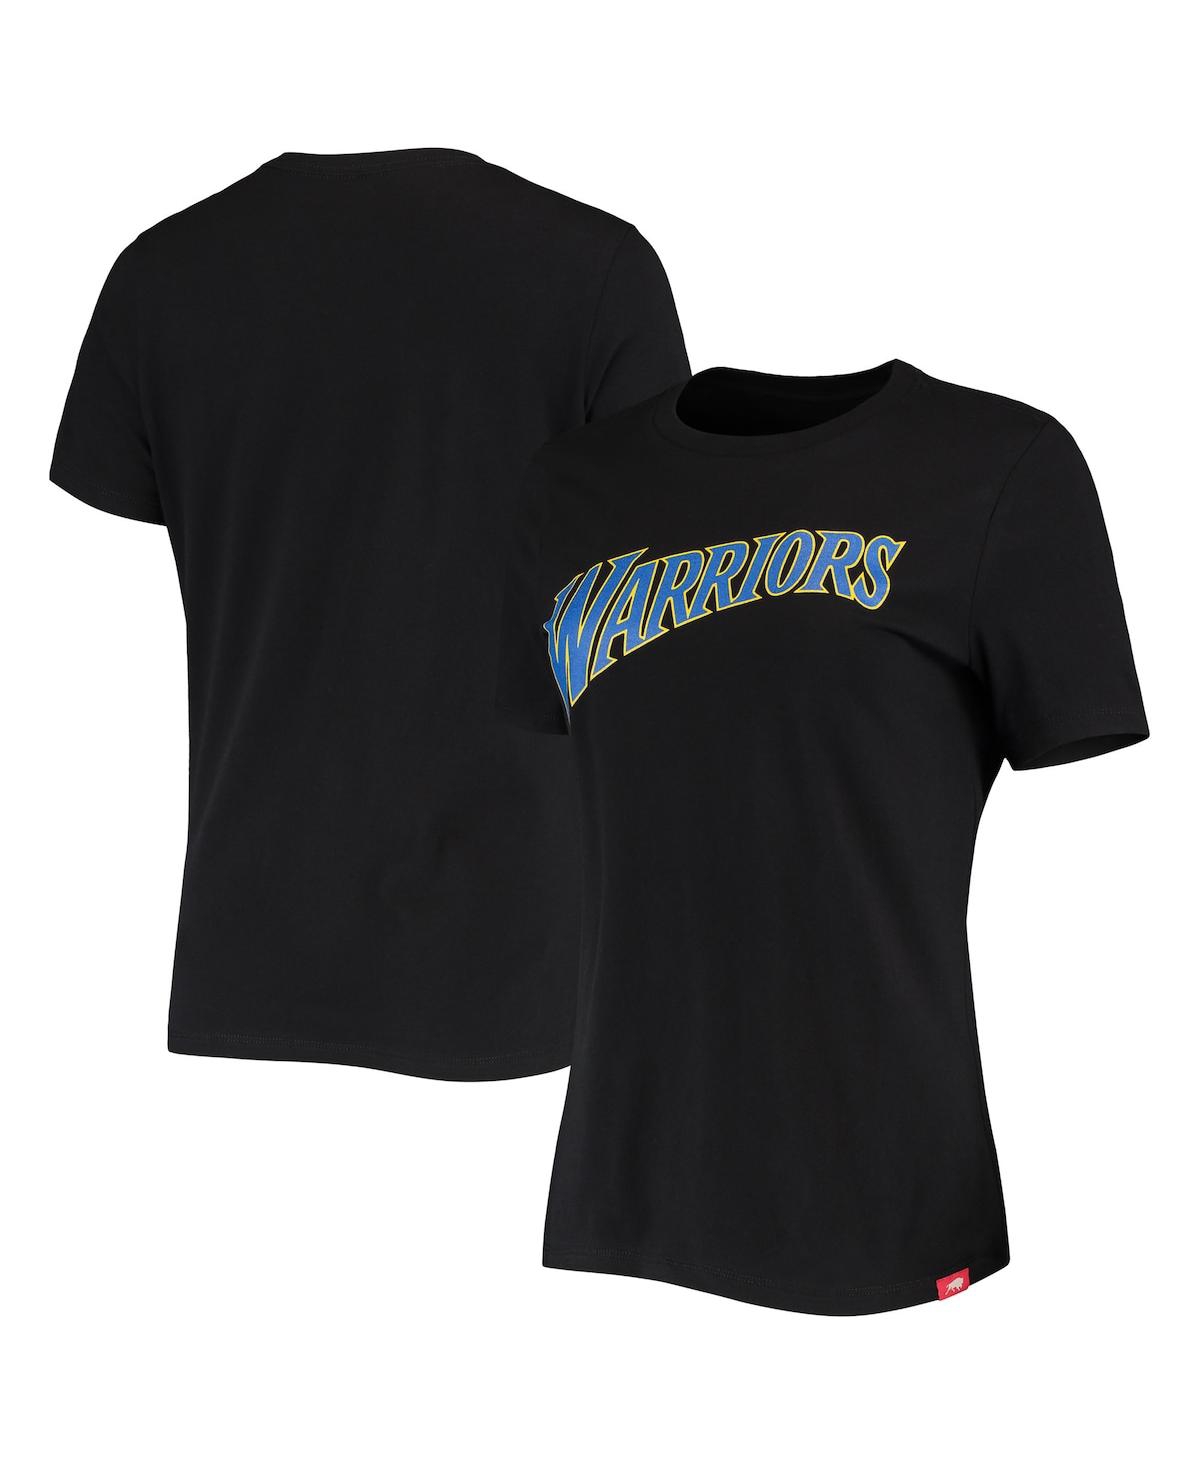 Women's Sportiqe Black Golden State Warriors Arcadia T-shirt - Black